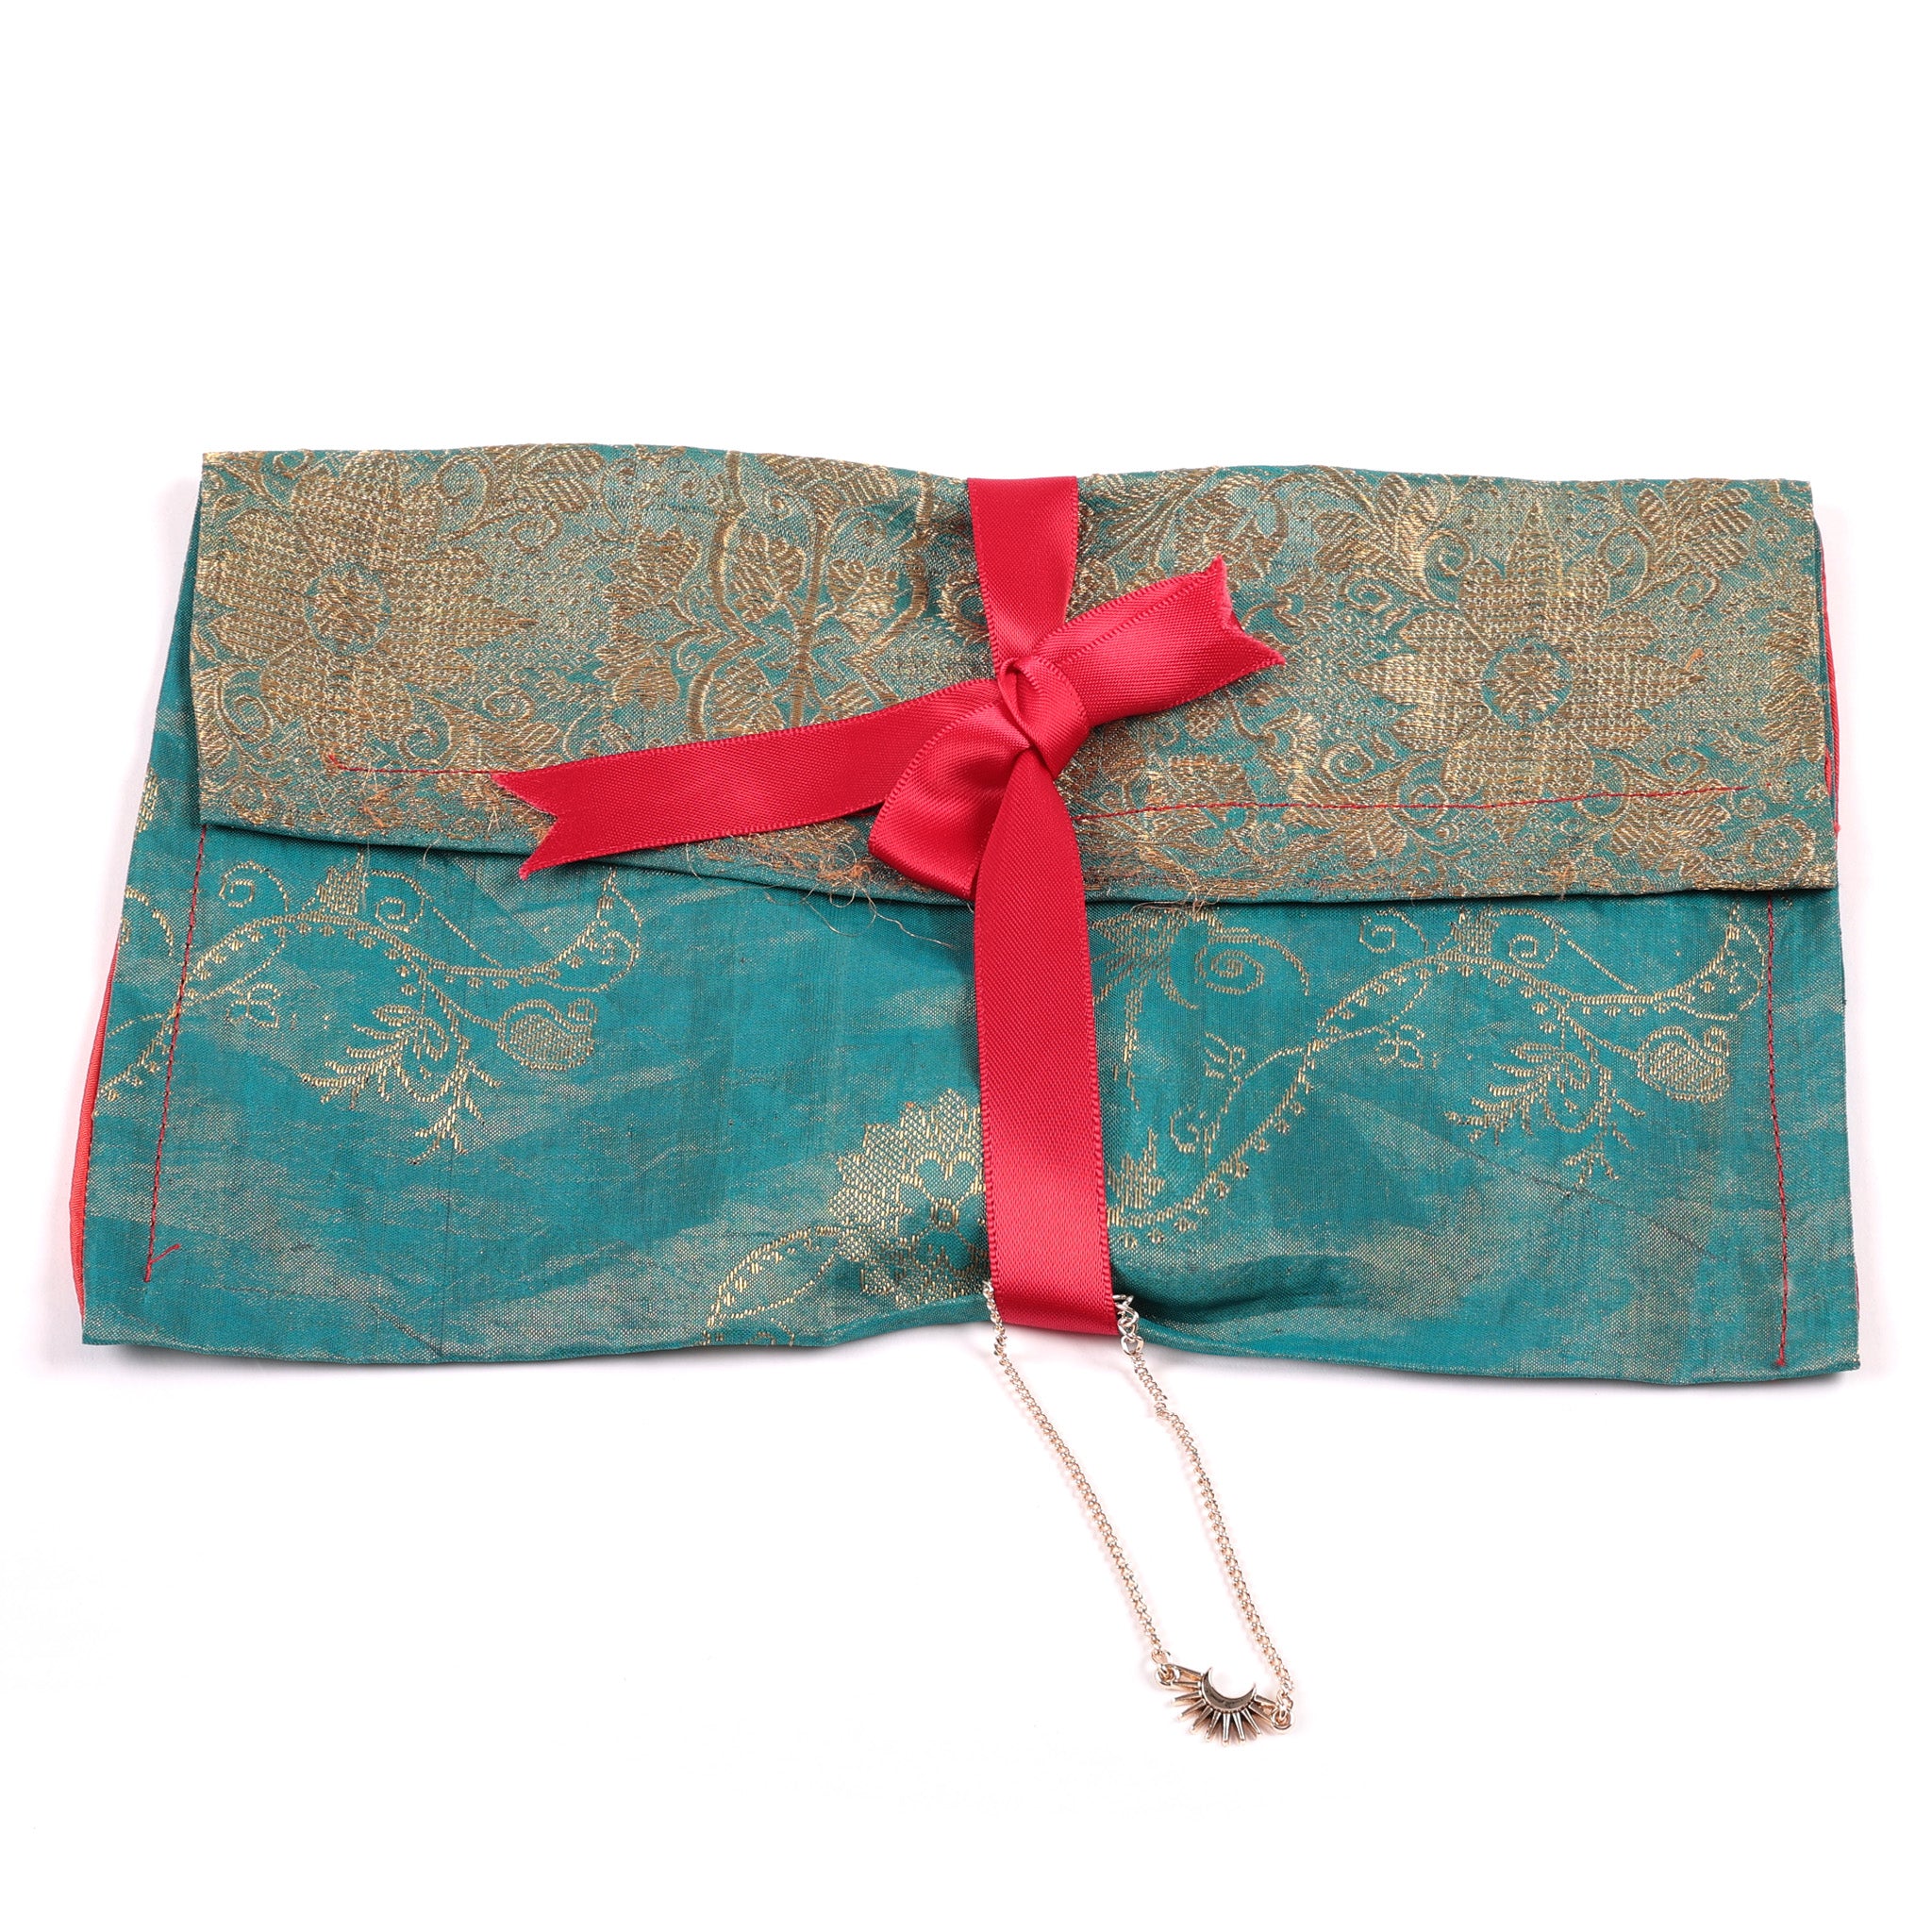 aquamarine purse made from vintage silk sari